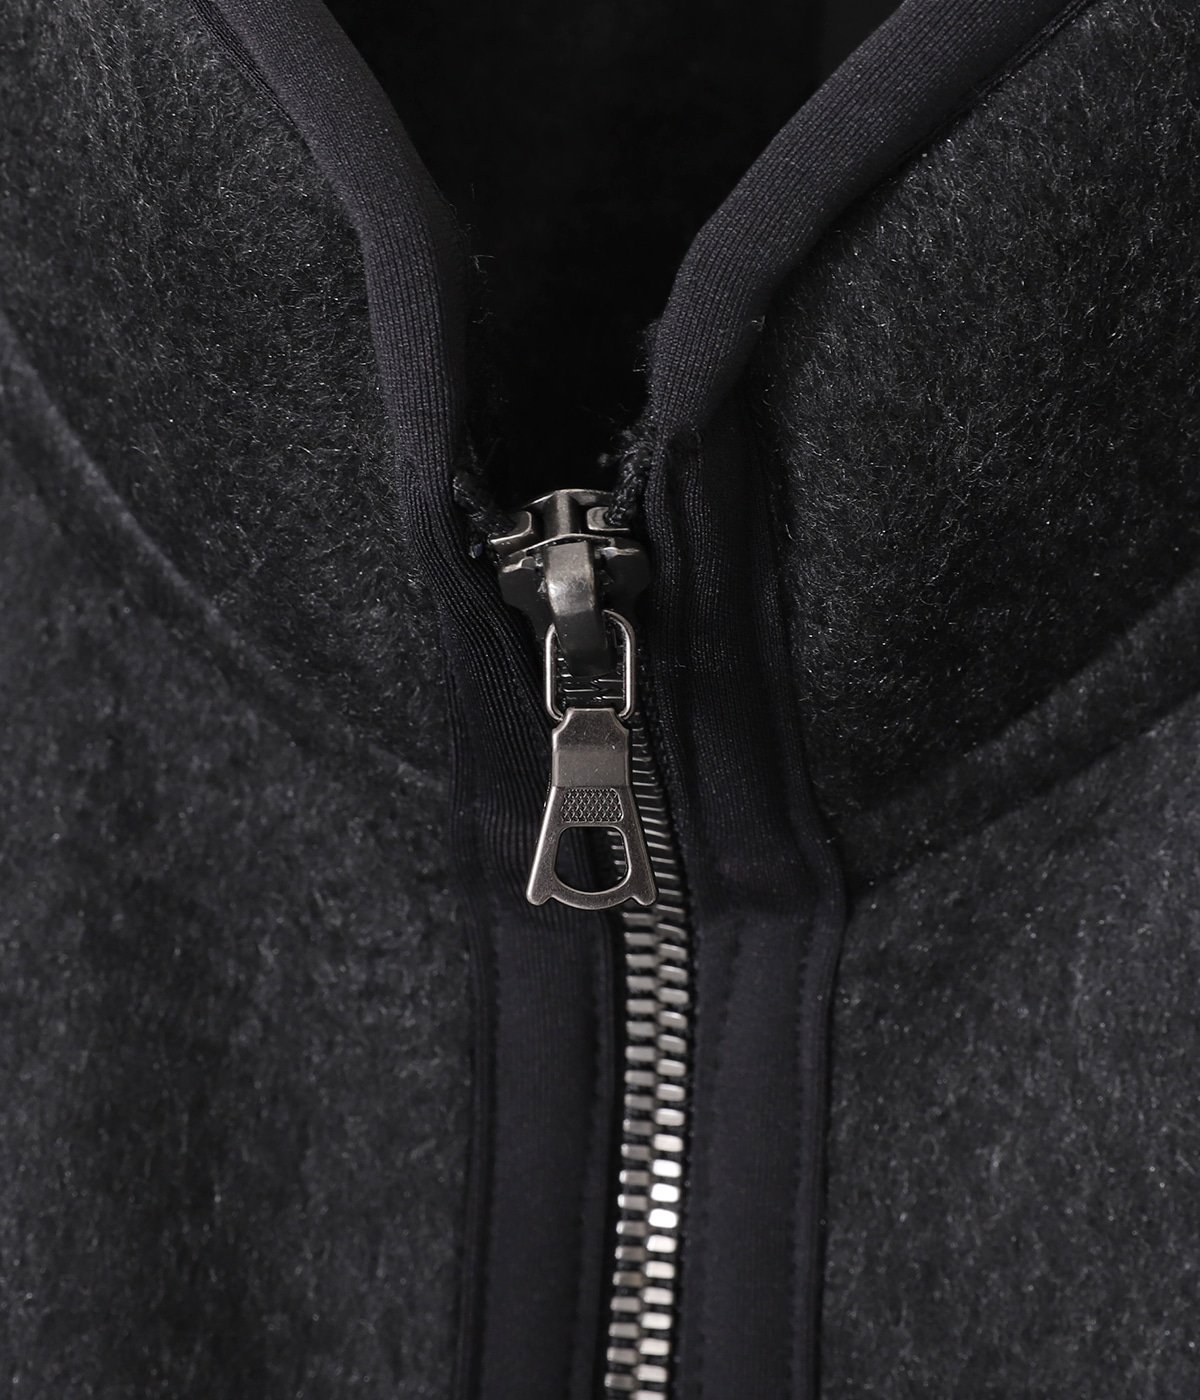 Pe/Silk Fleece ZIP Jacket | blurhms(ブラームス) / アウター フリース (メンズ)の通販